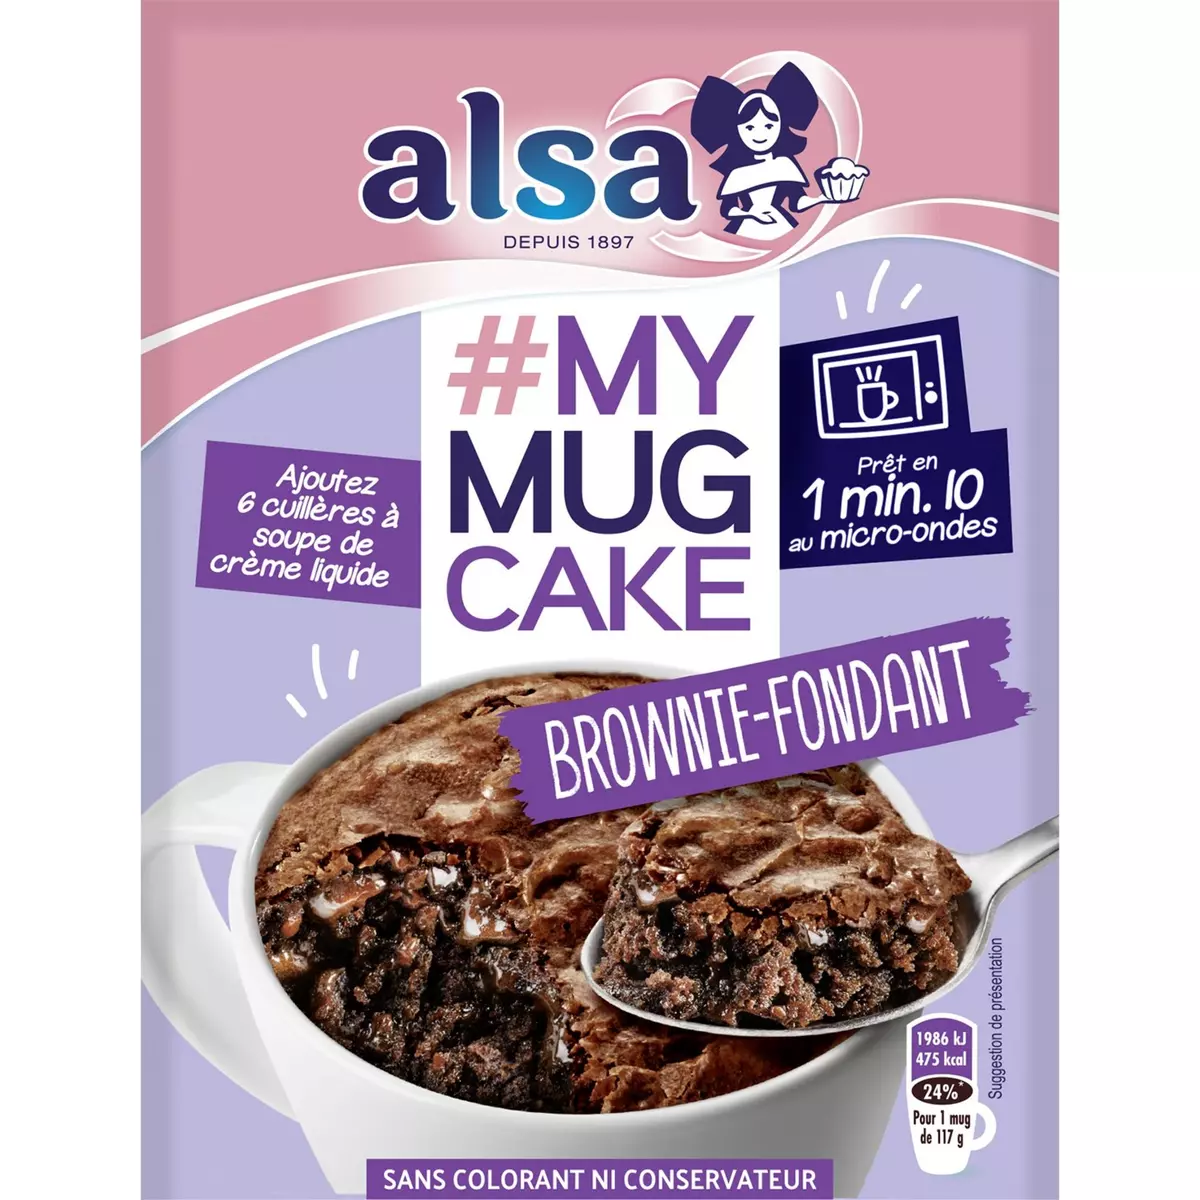 ALSA My Mug Cake préparation brownie fondant 70g